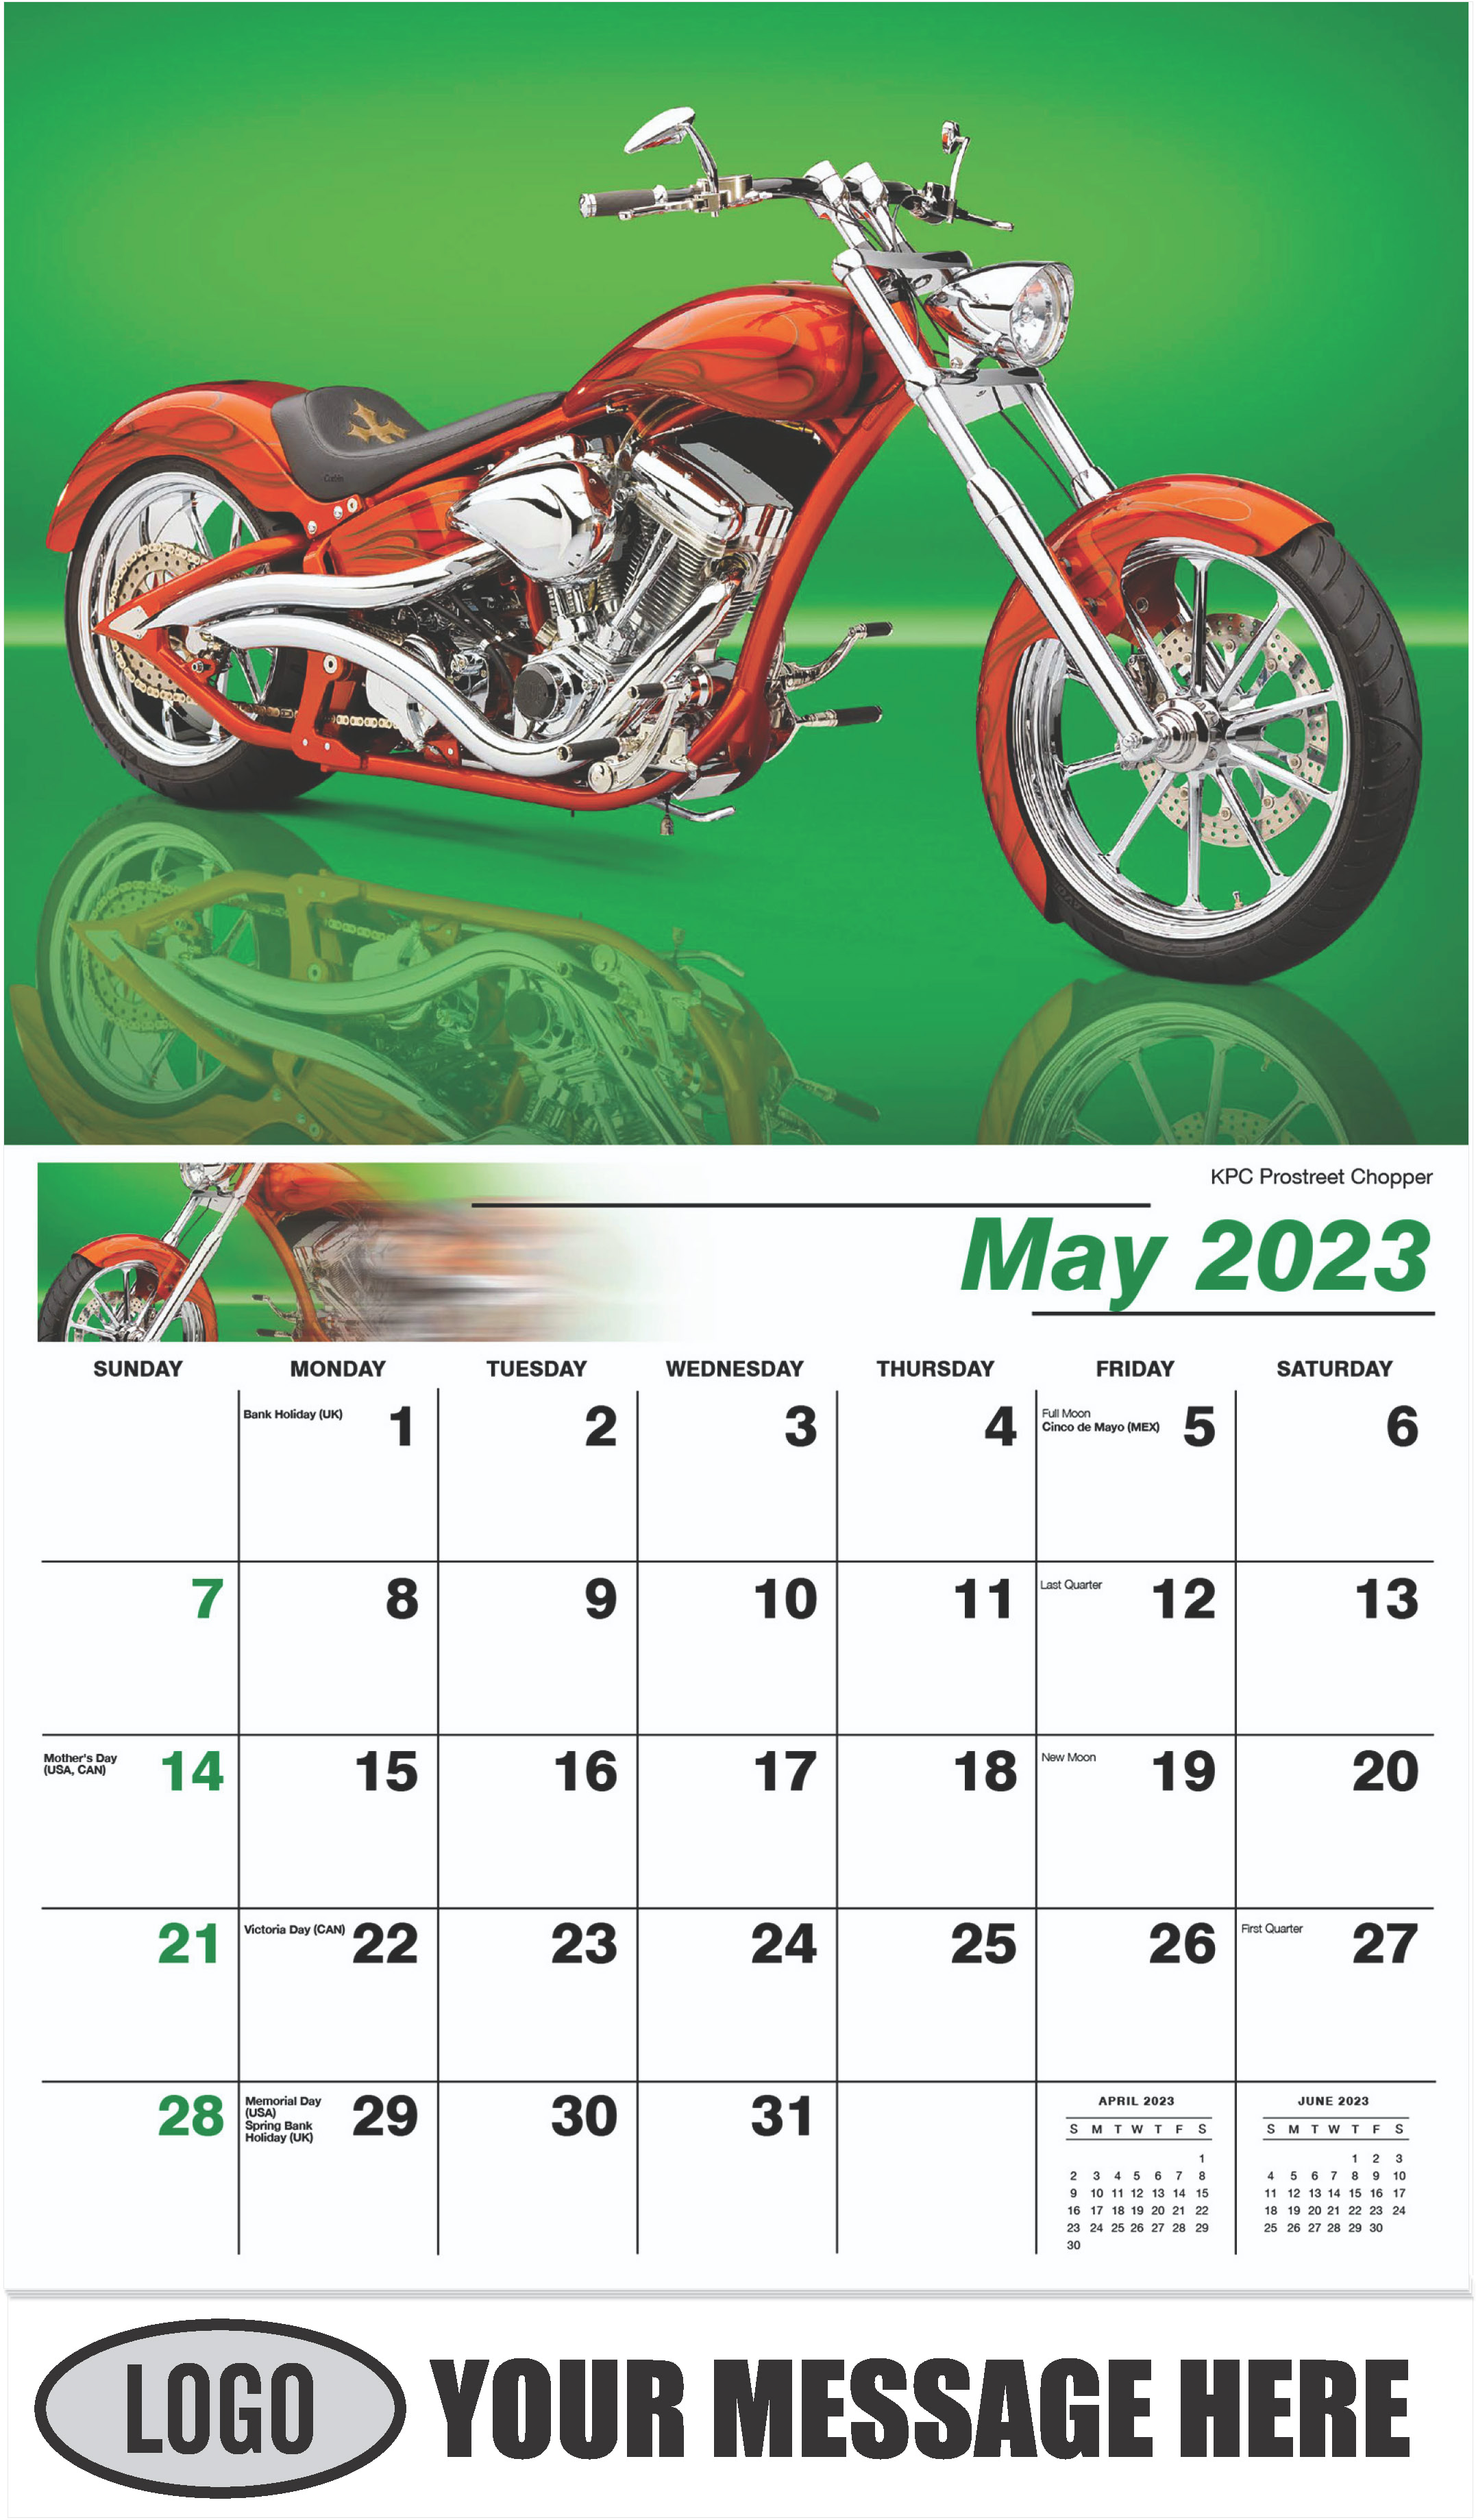 KPC Prostreet Chopper - May - Motorcycle Mania 2023 Promotional Calendar